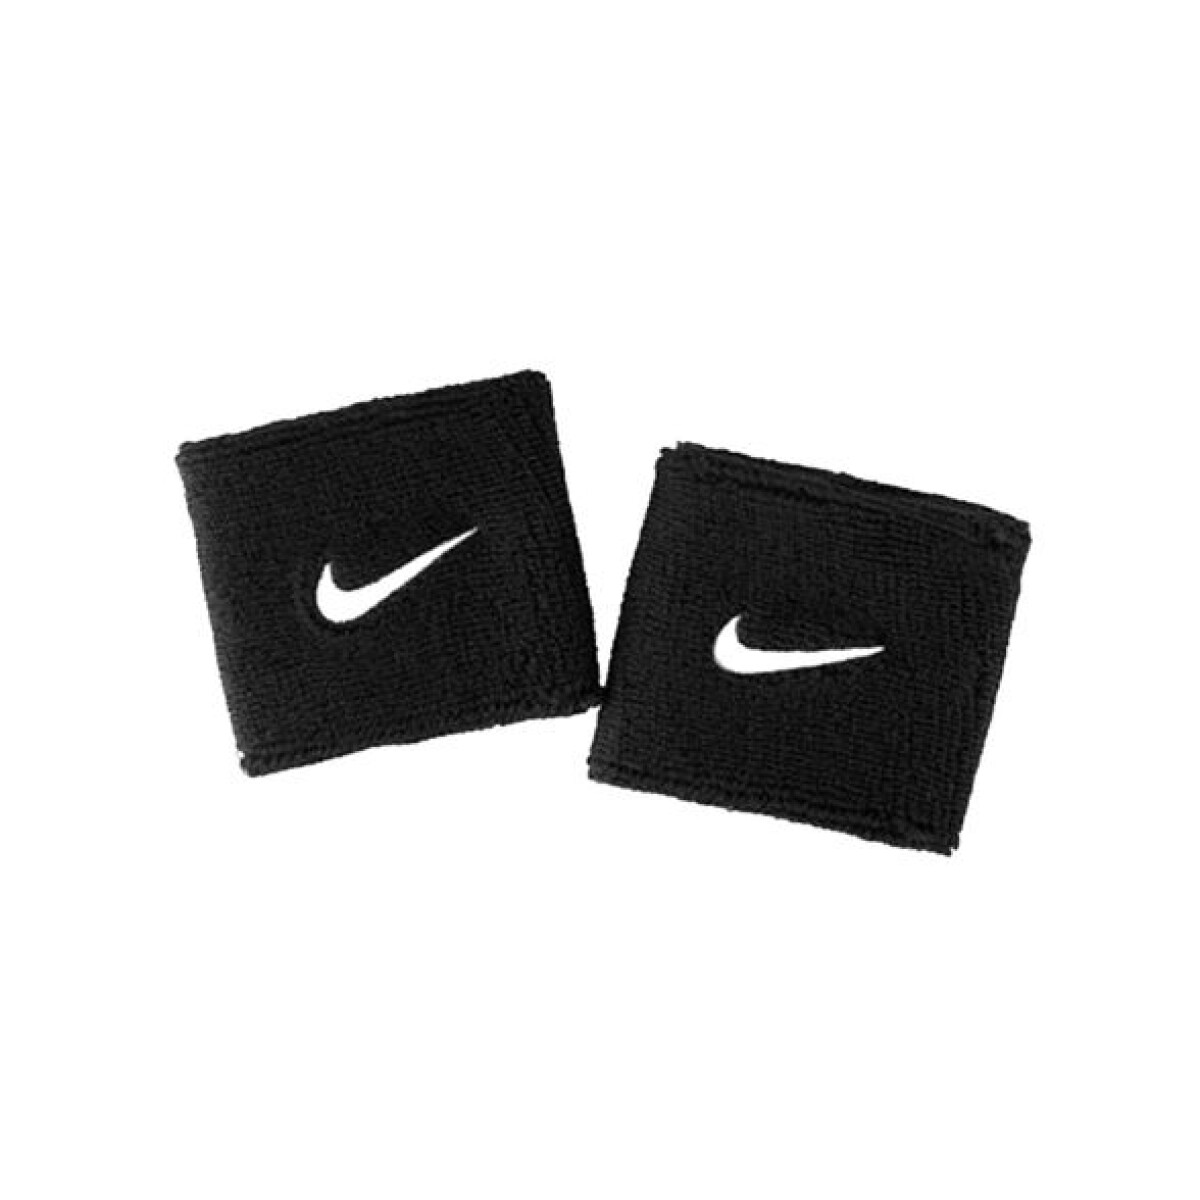 Muñequera Nike Swoosh Wristbands Black/White - Color Único 